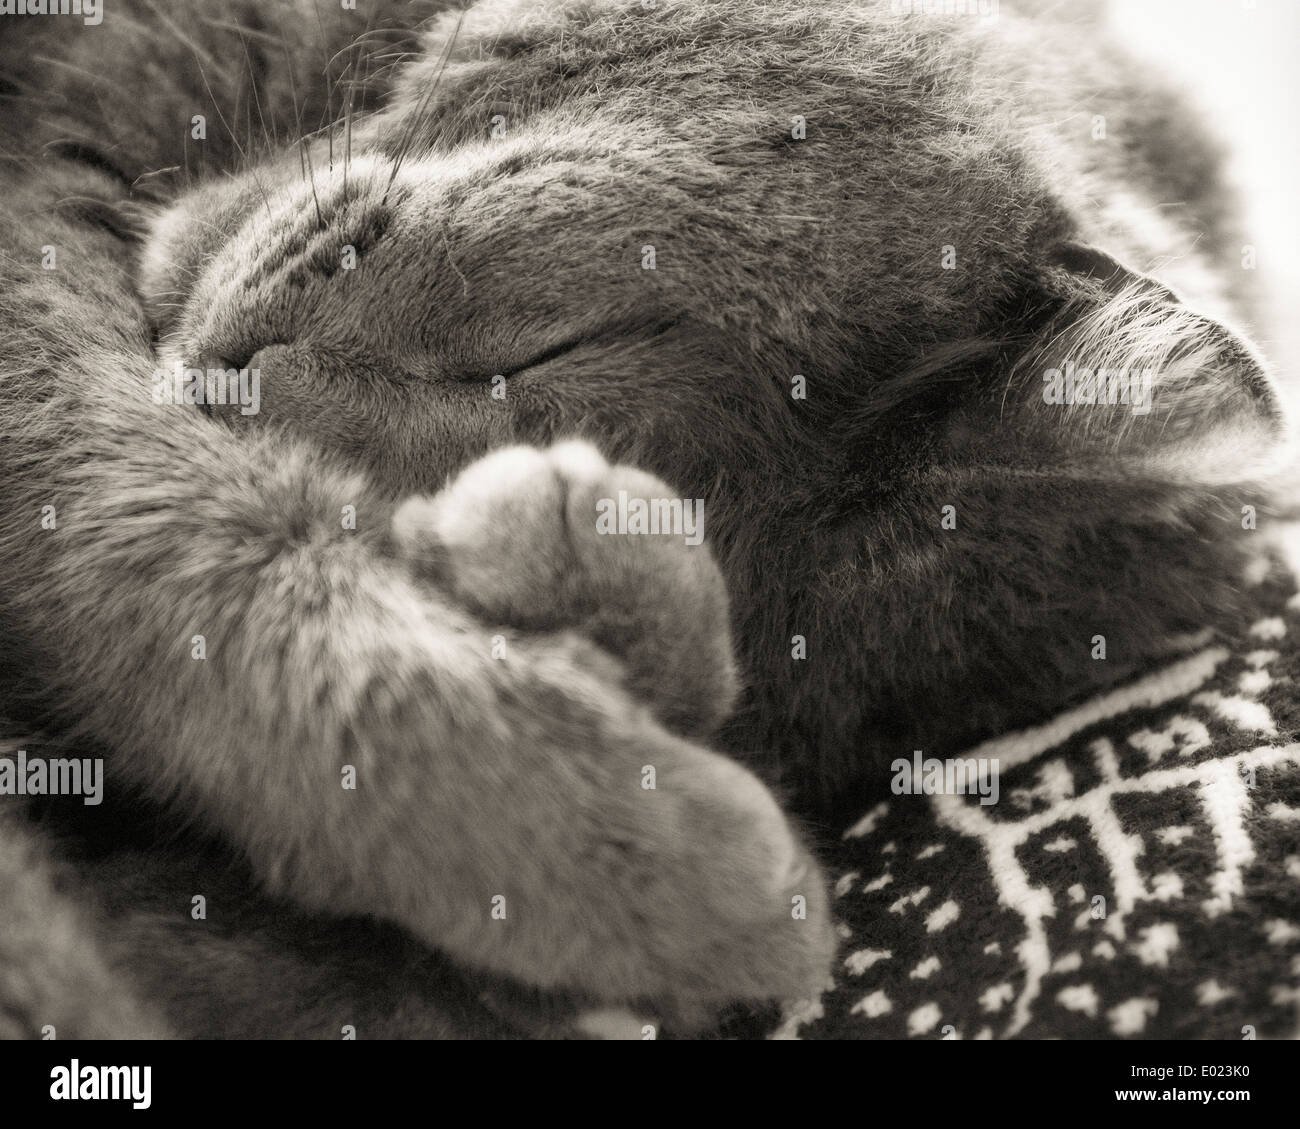 Closeup of cat napping - monochrome image. Stock Photo